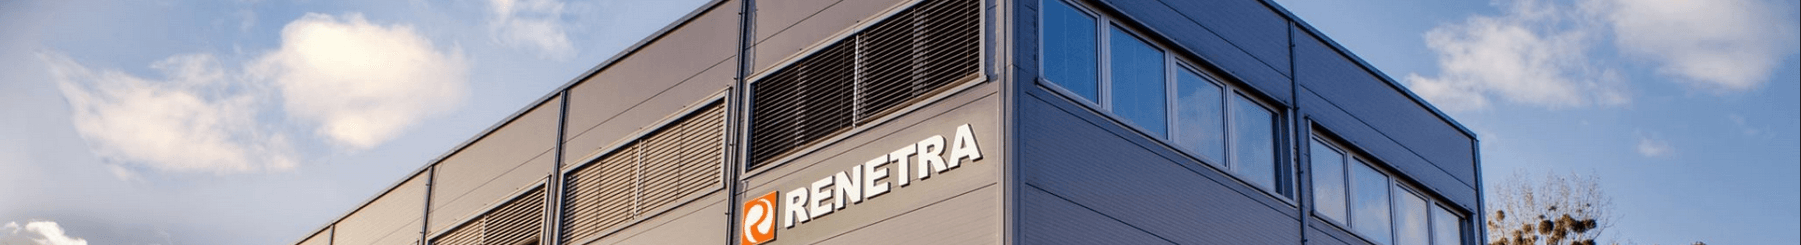 Renetra